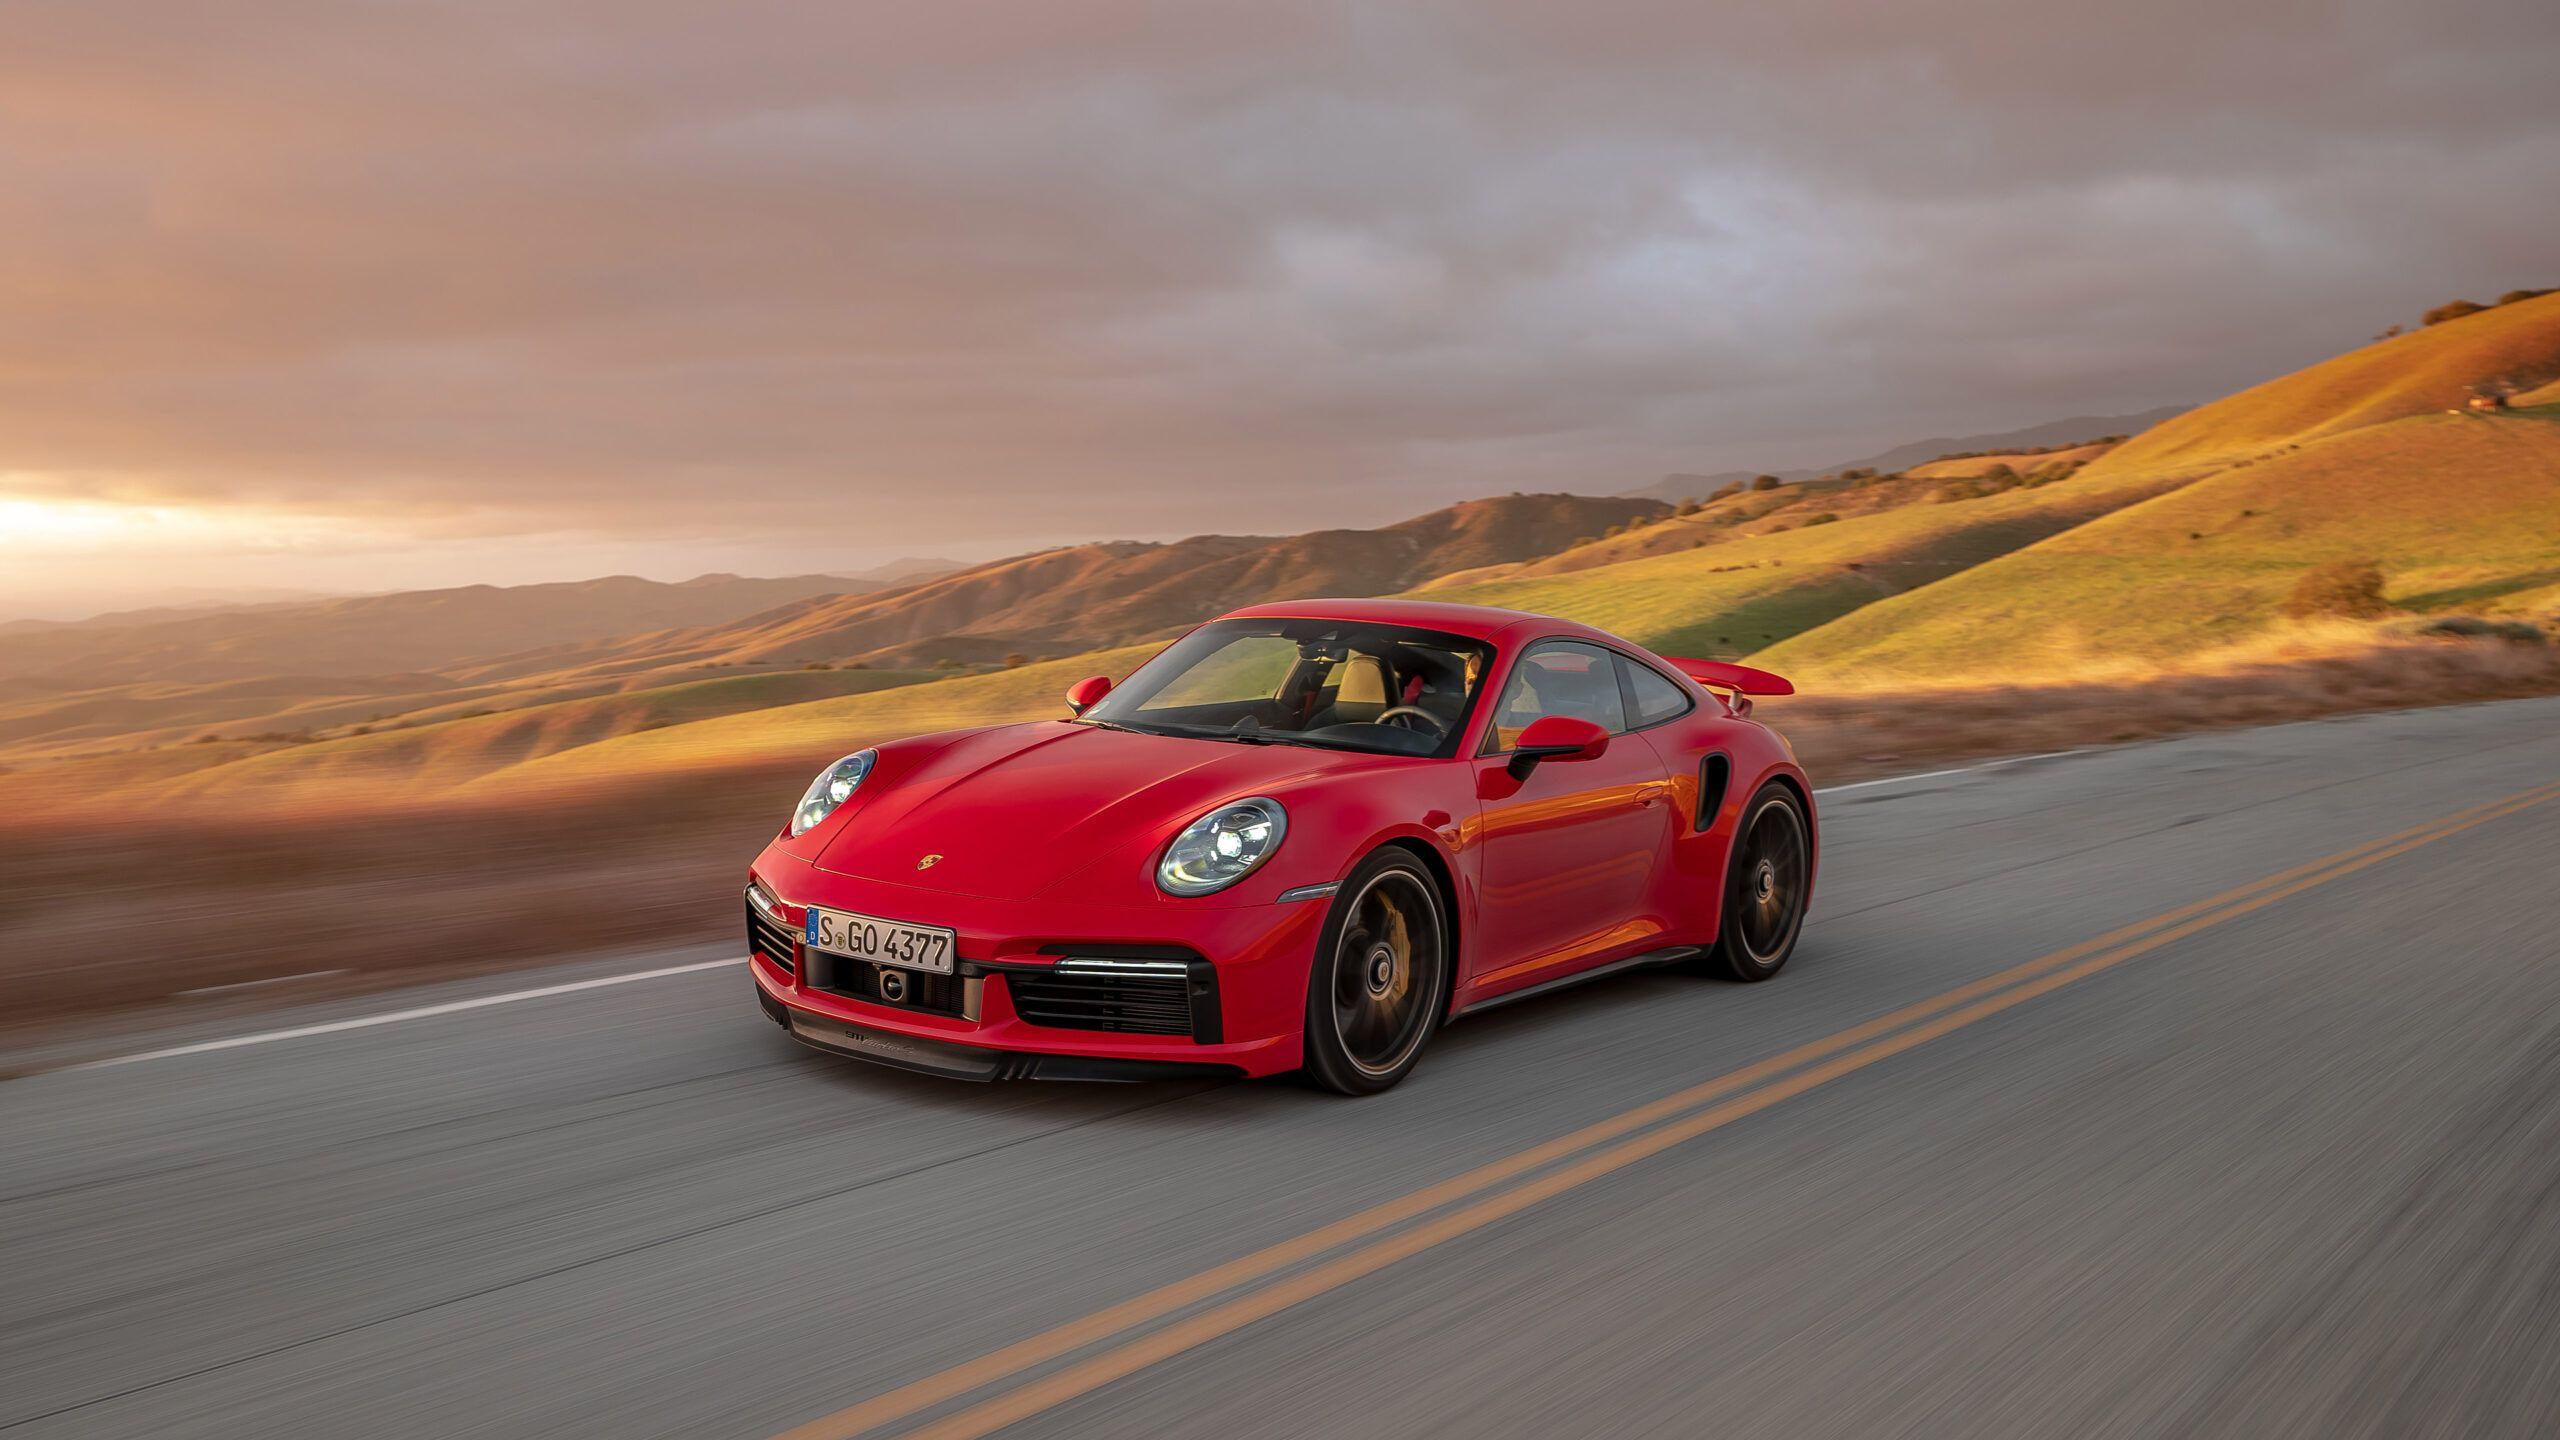 Porsche 911 Red Wallpapers Top Free Porsche 911 Red Backgrounds